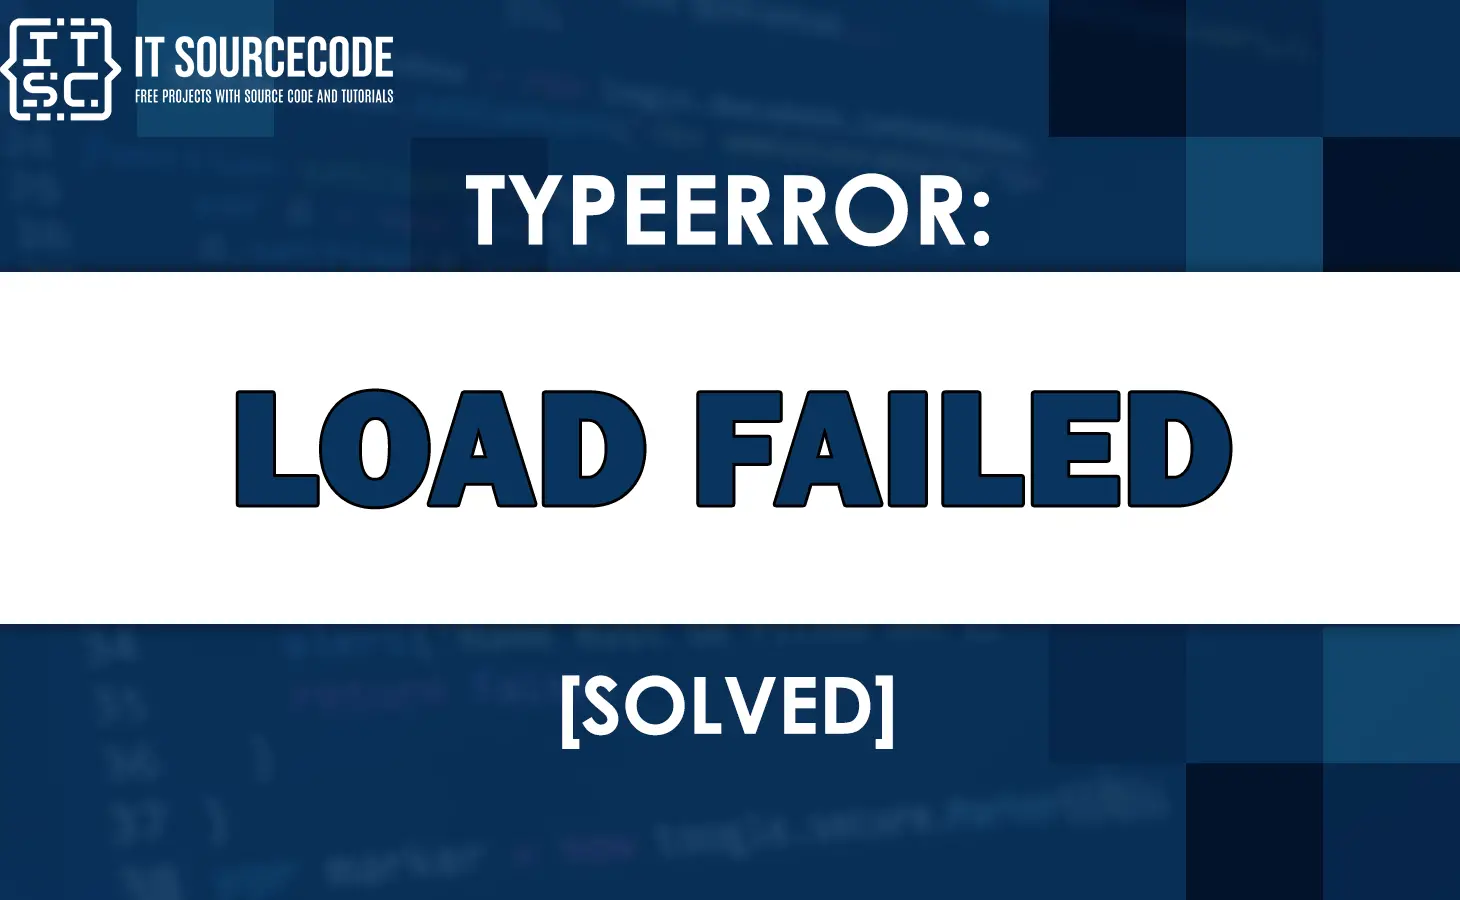 Typeerror: load failed [SOLVED]